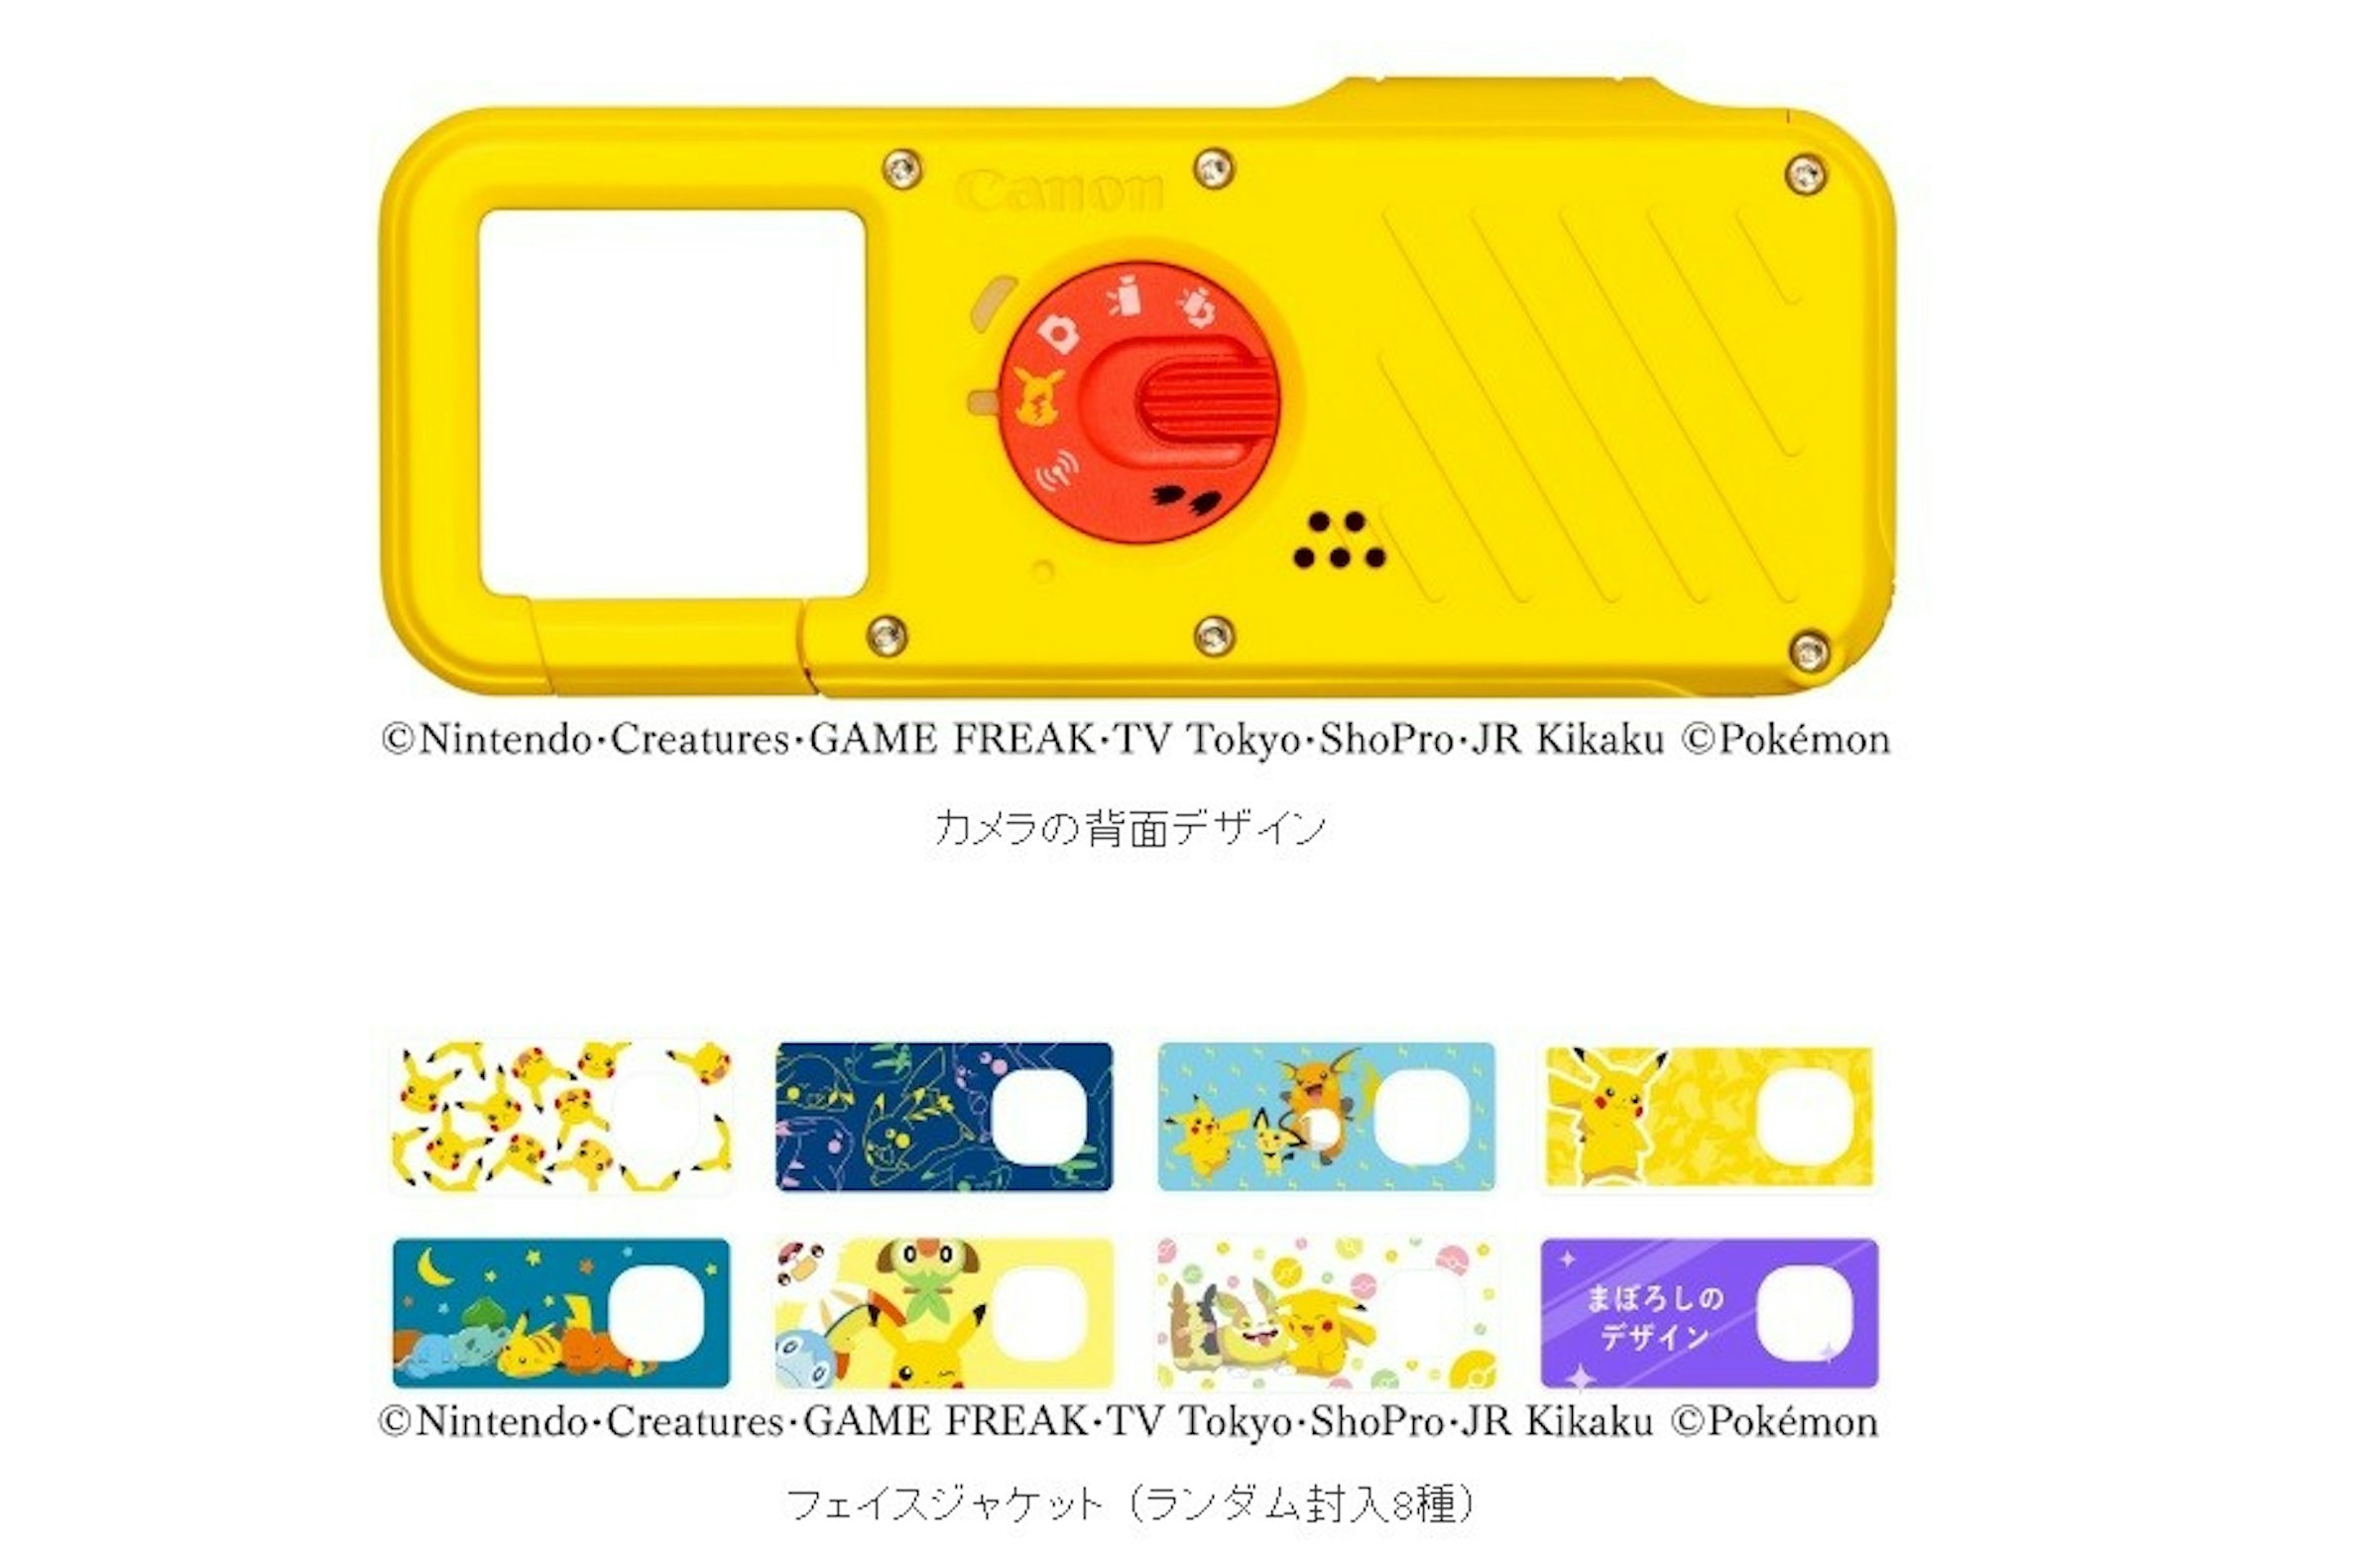 Canon 創意相機inspic Rec 推出inspic Rec Pikachu Model 採用電器老鼠鮮豔黃色 皮卡丘 157567 癮科技cool3c